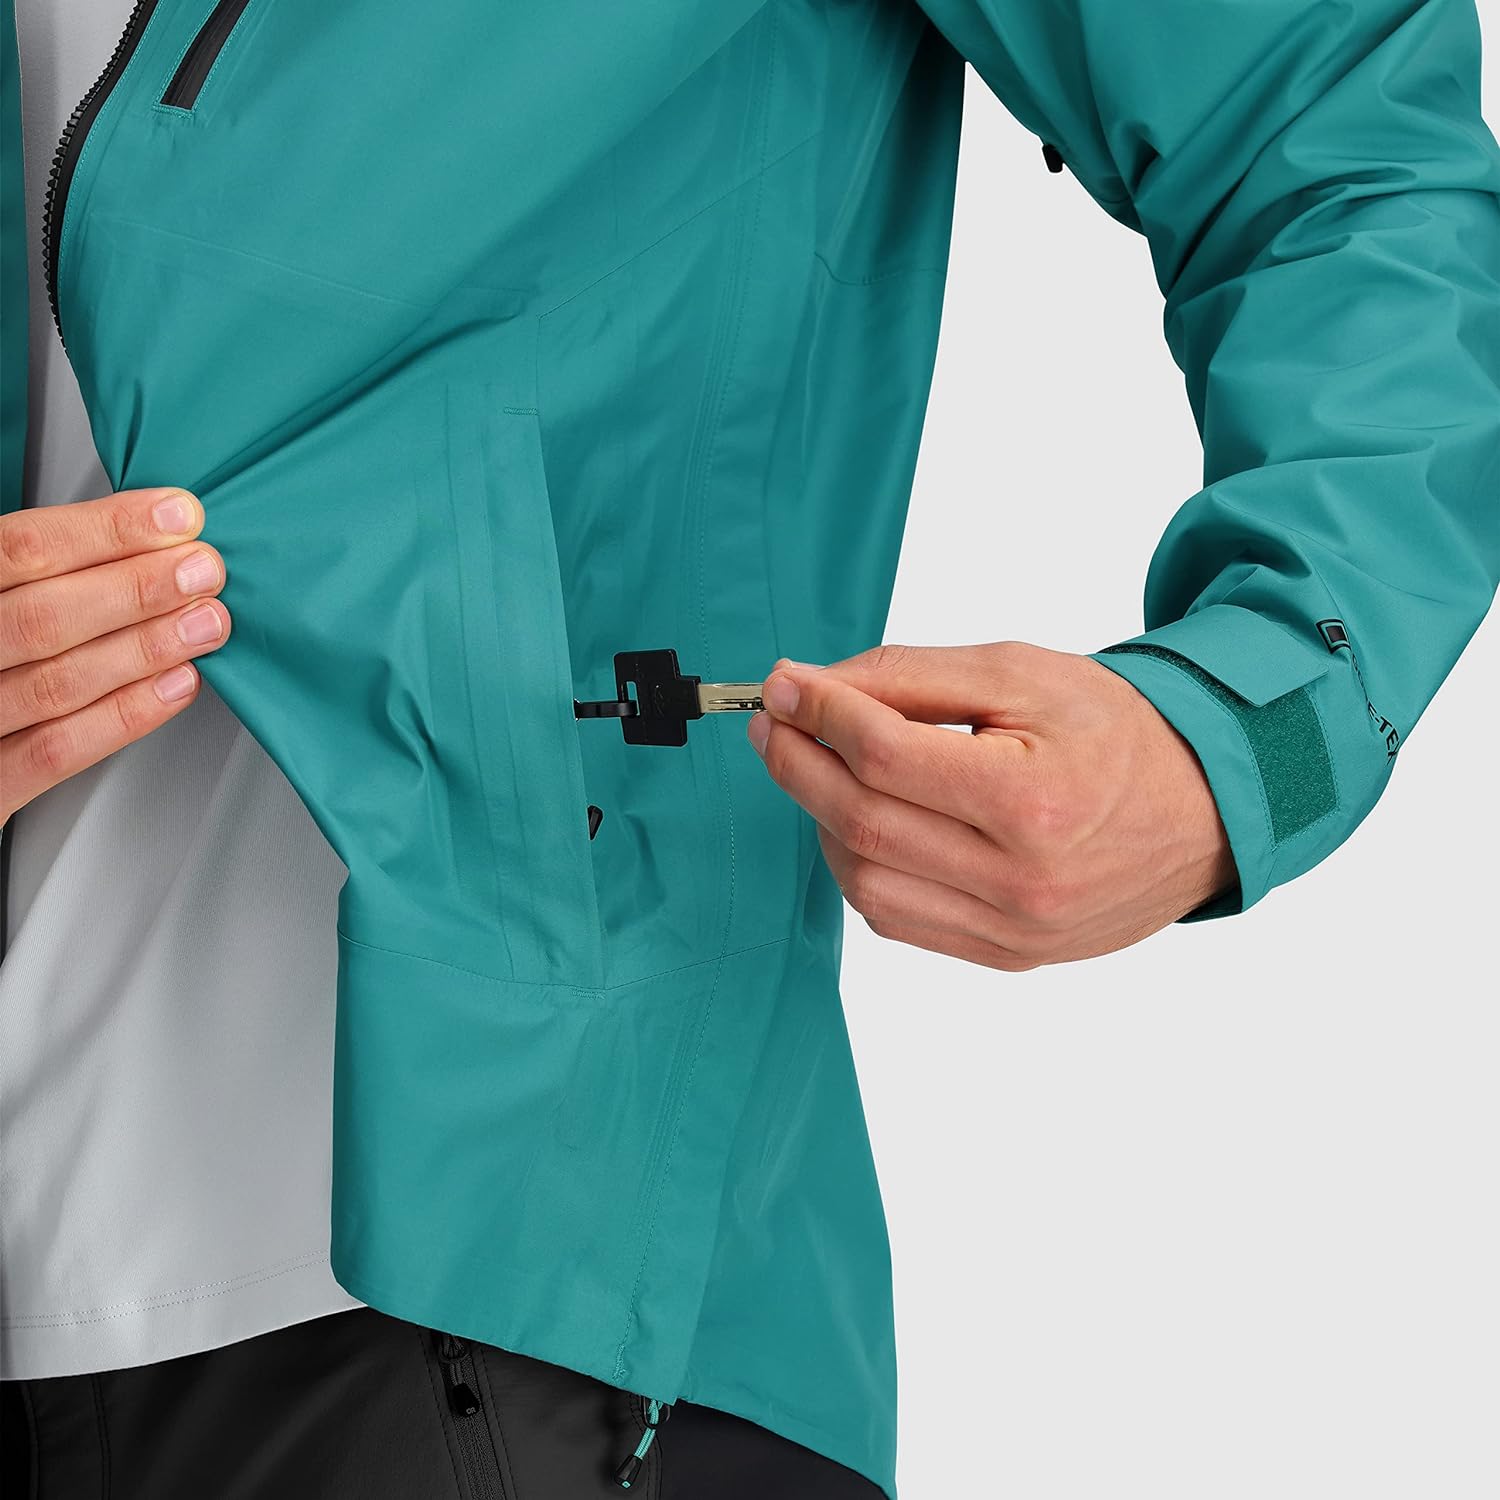 Men's Foray GORE-TEX® Super Stretch Jacket